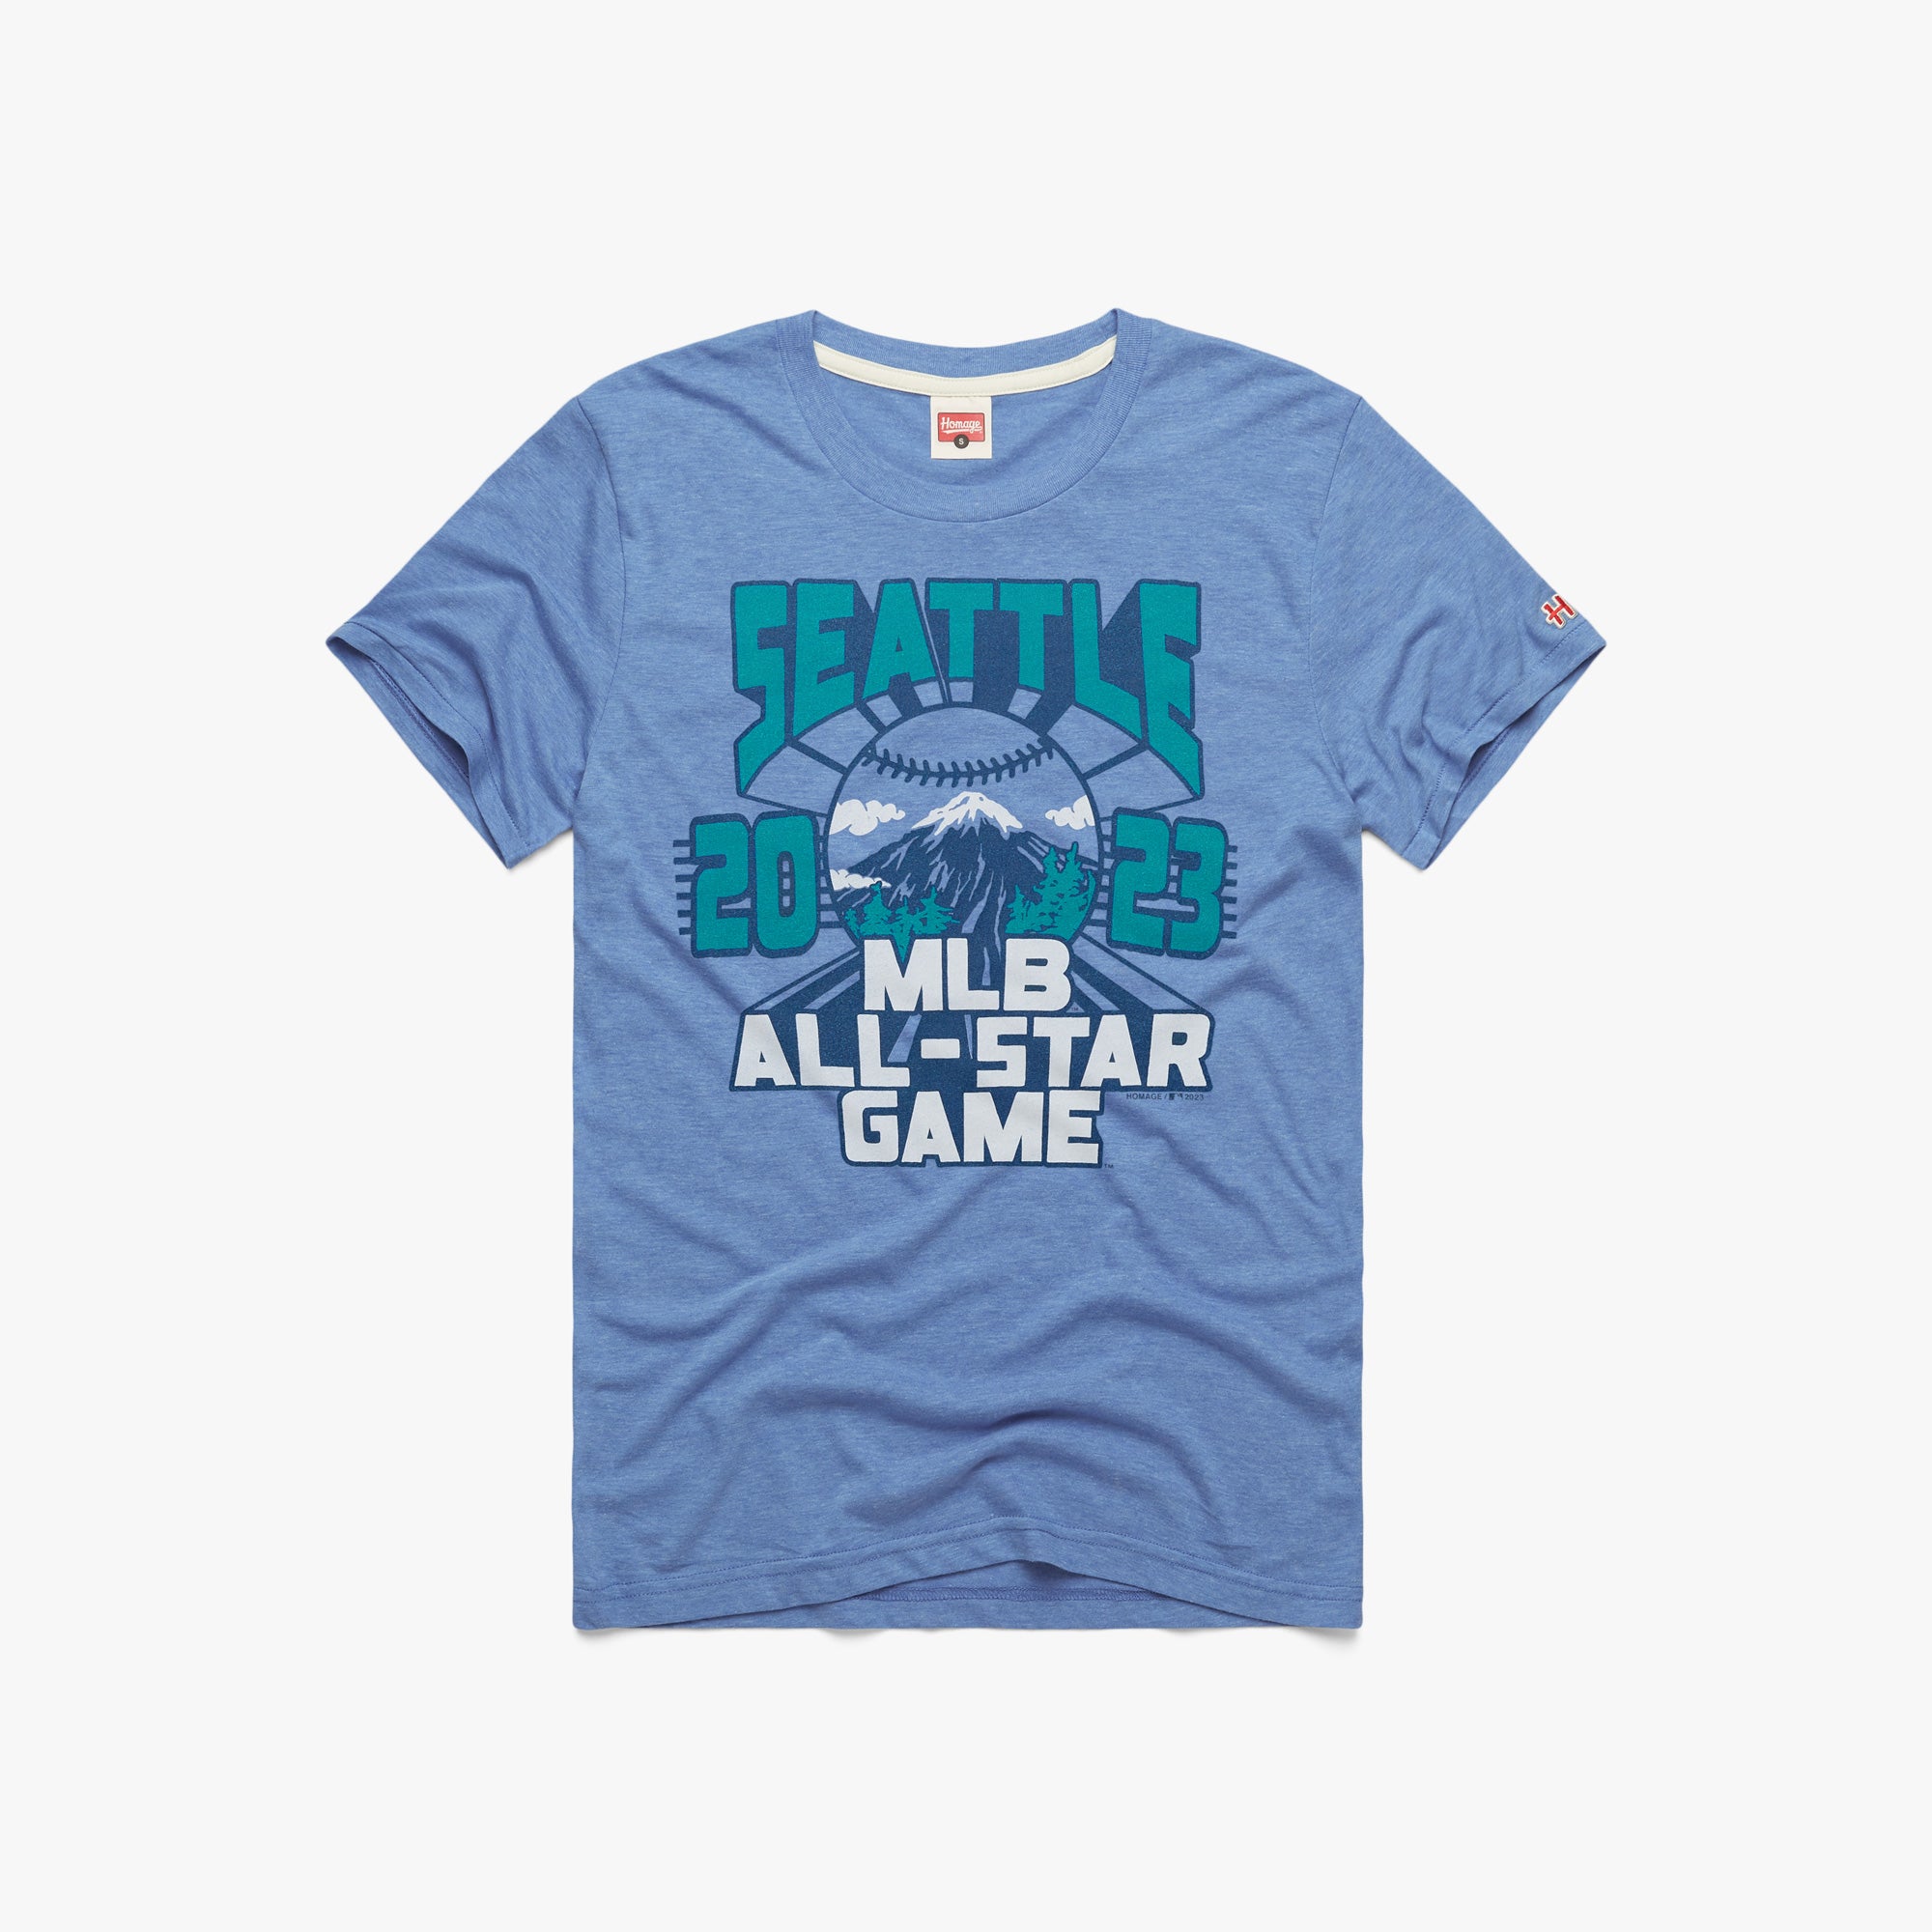 baseball all star shirt